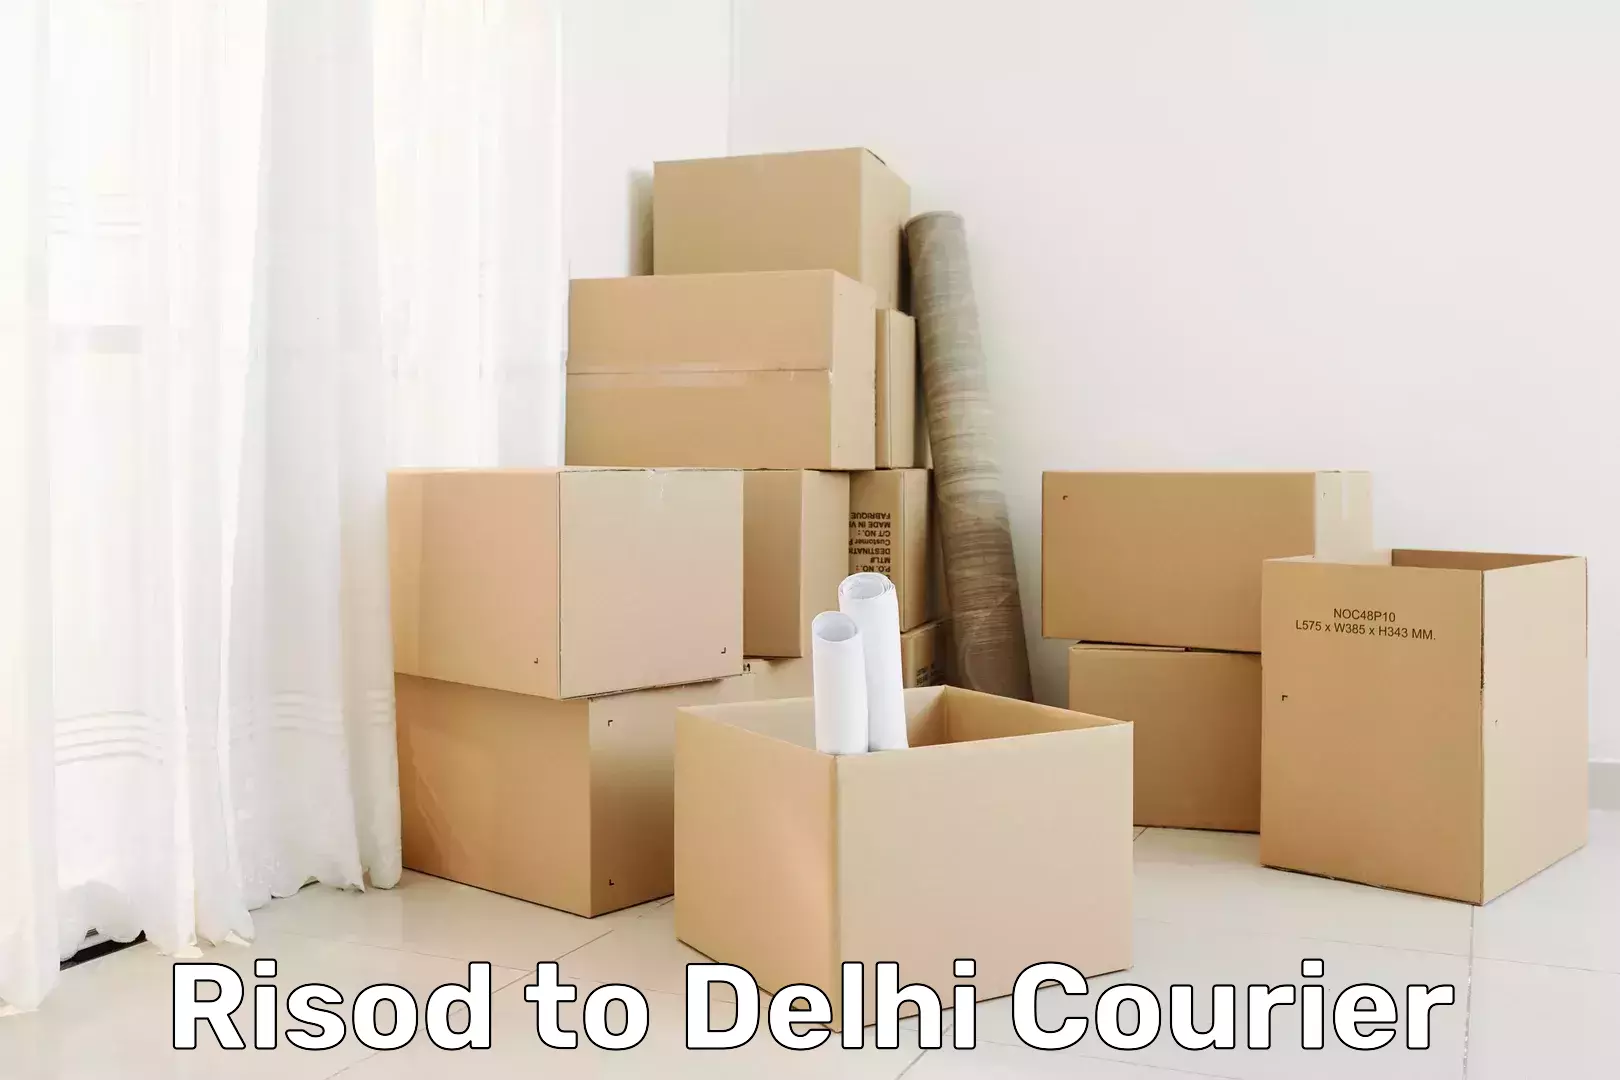 Courier service comparison Risod to Ramesh Nagar